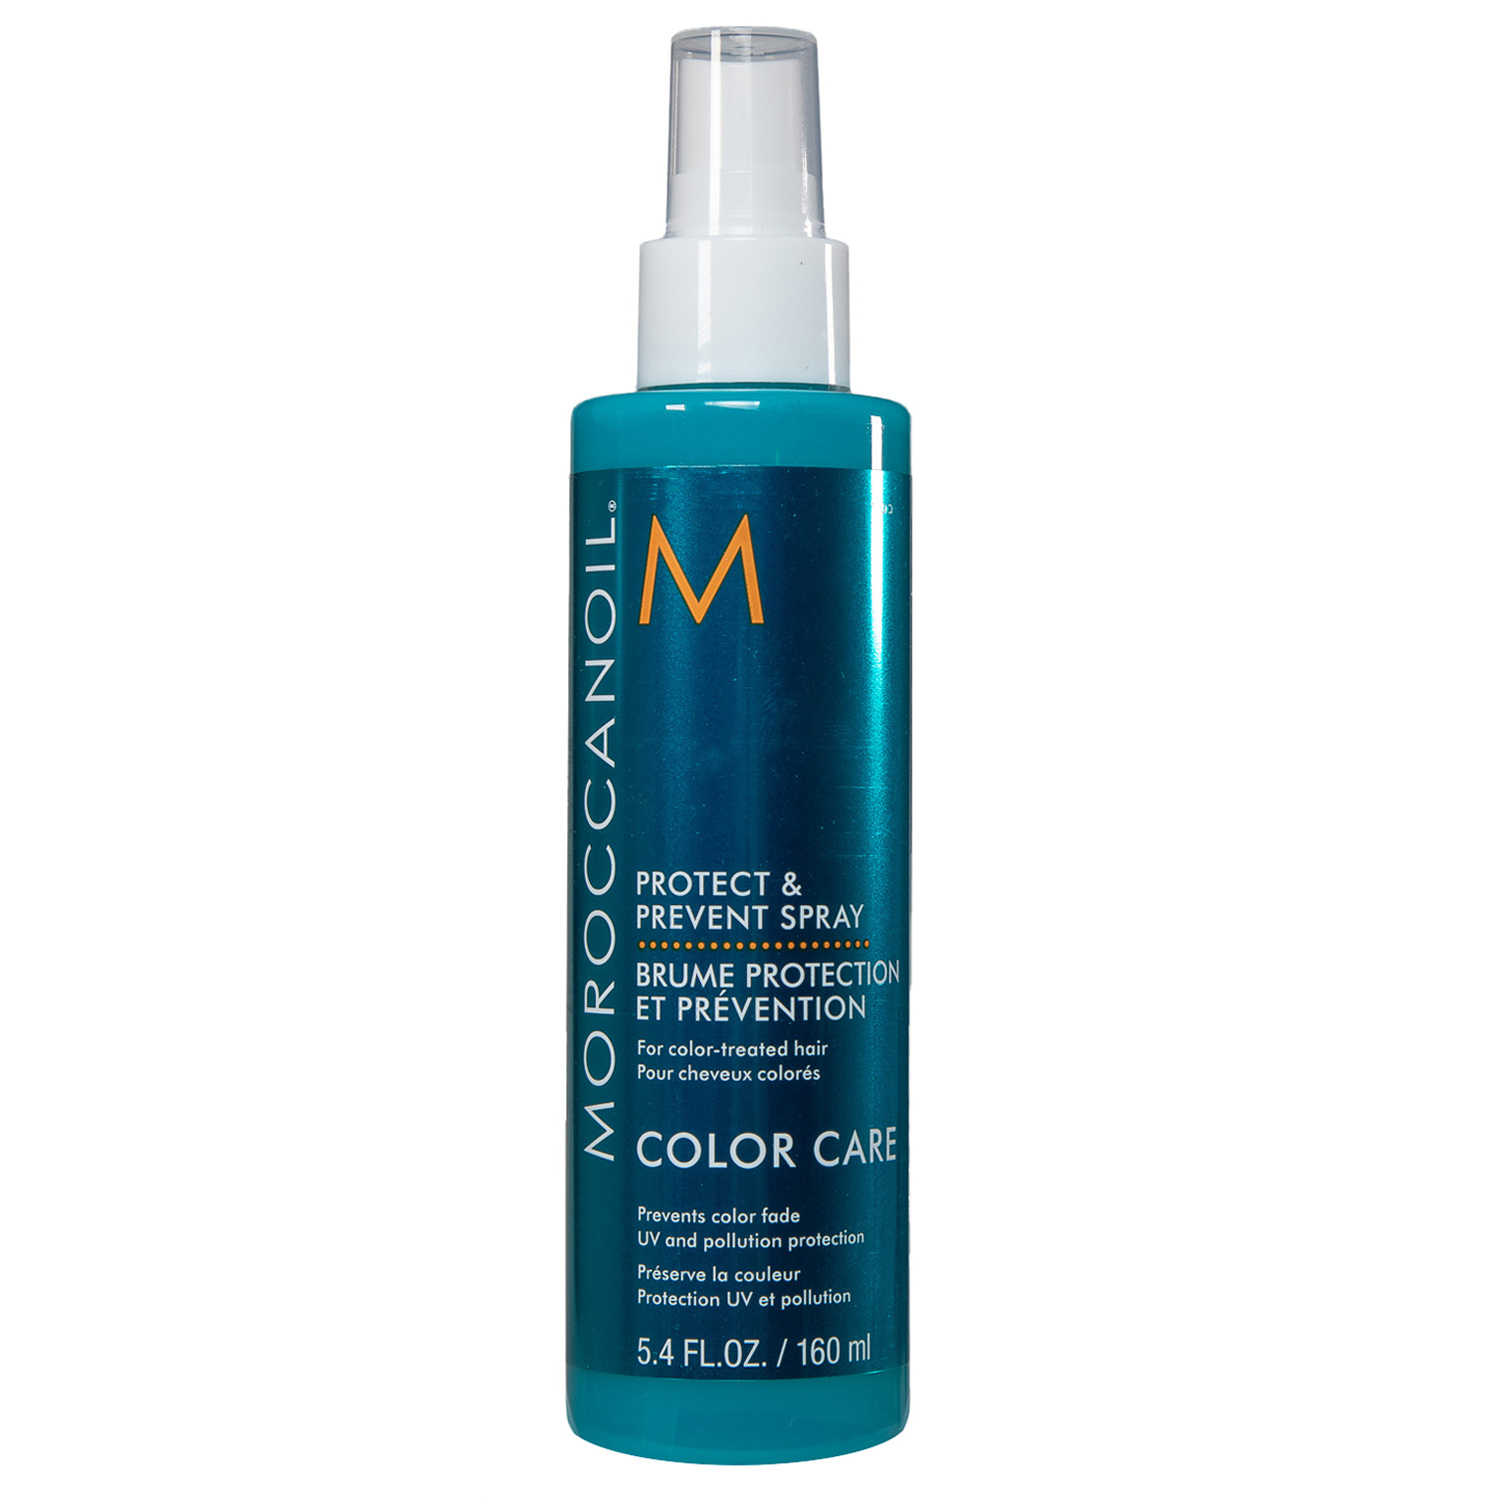 Moroccanoil Спрей для сохранения цвета Protect & prevent spray, 160 мл (Moroccanoil, Color Care)